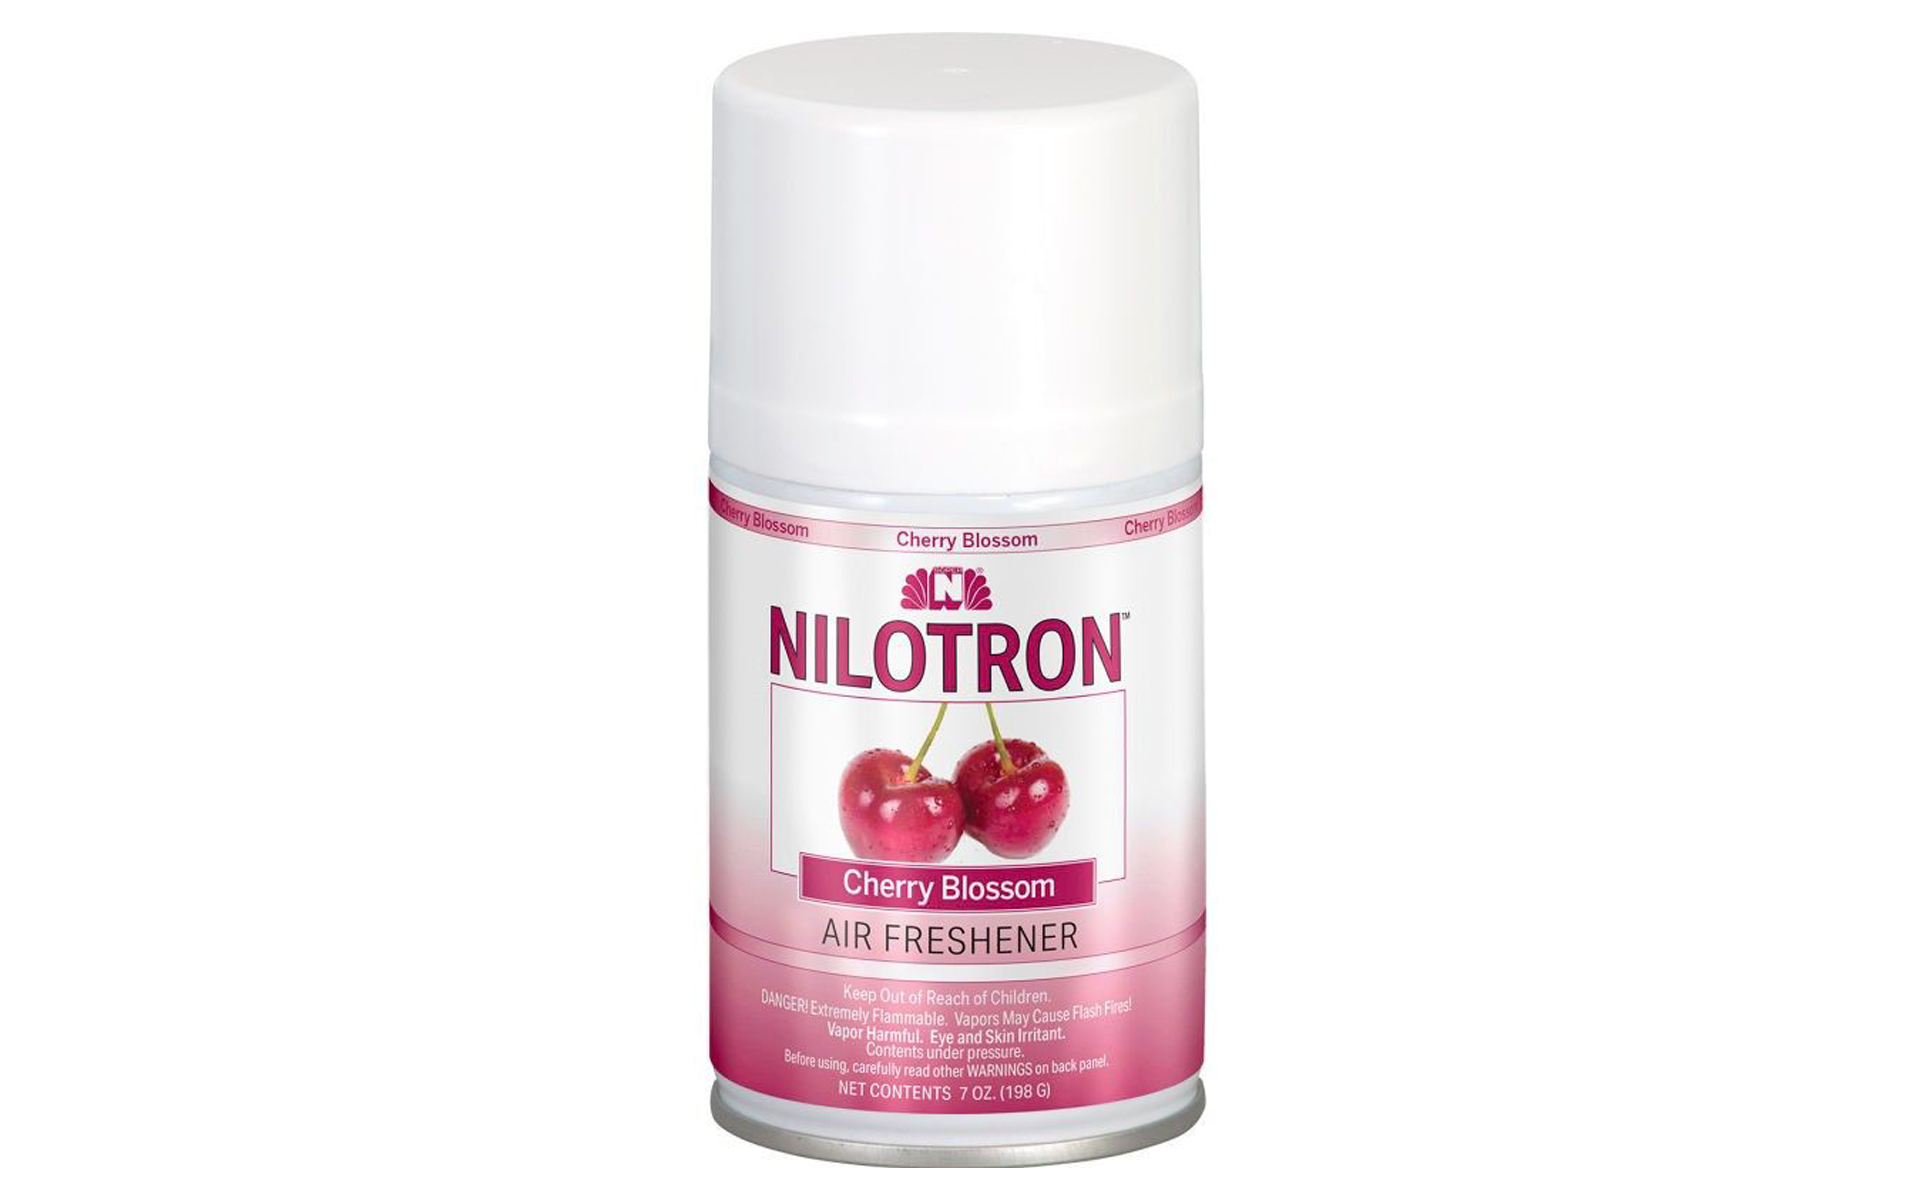 Nilotron Deodorizing Air Freshener Cherry Blossom Scent